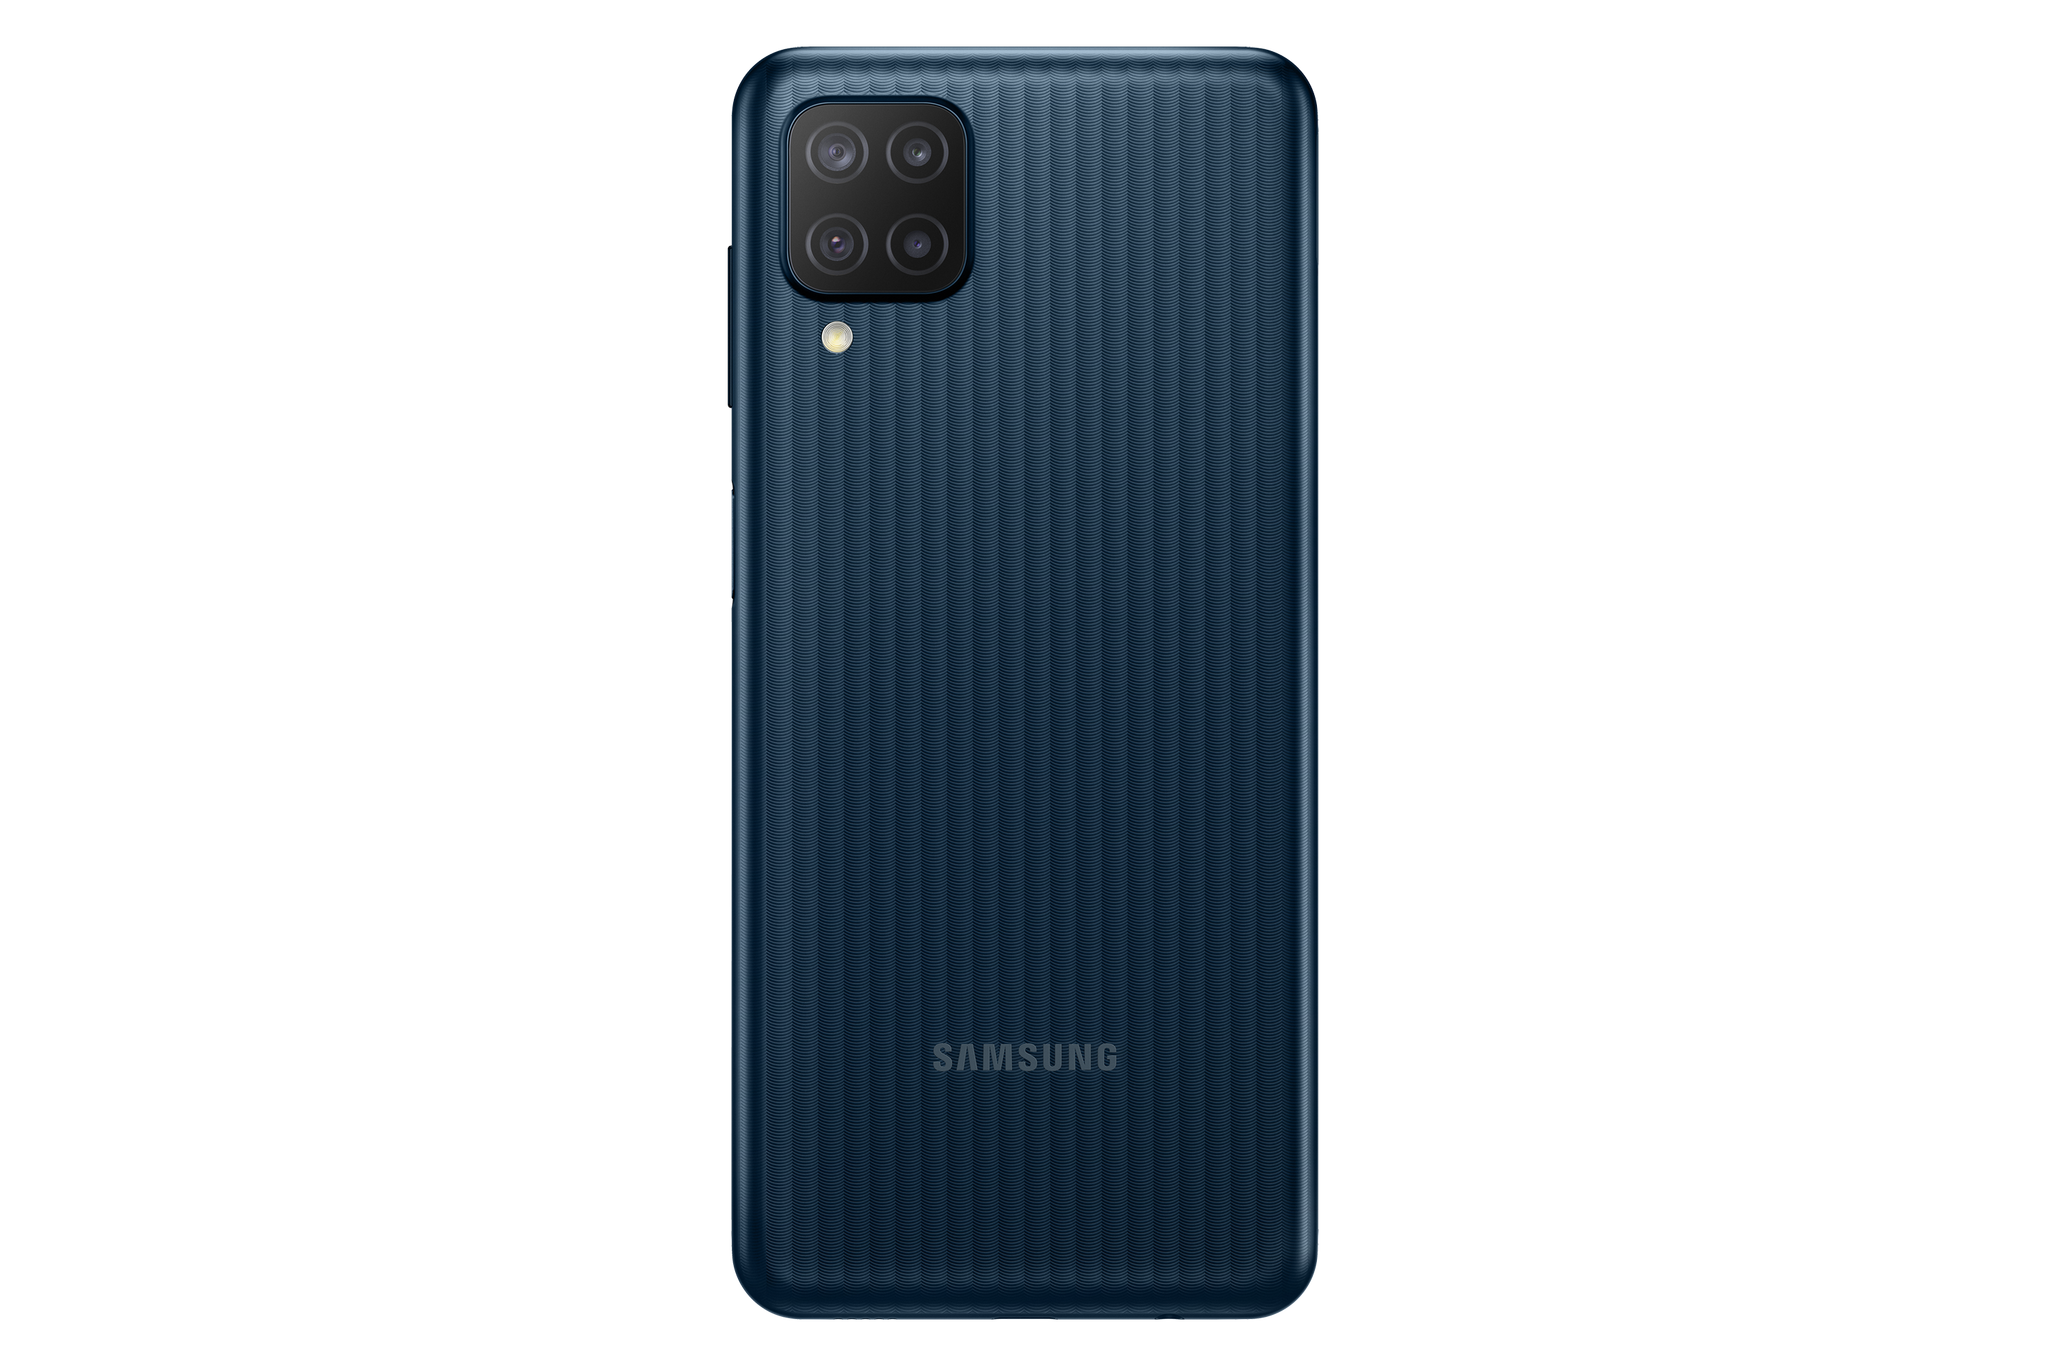 Samsung Galaxy M12 64GB Phone - Black